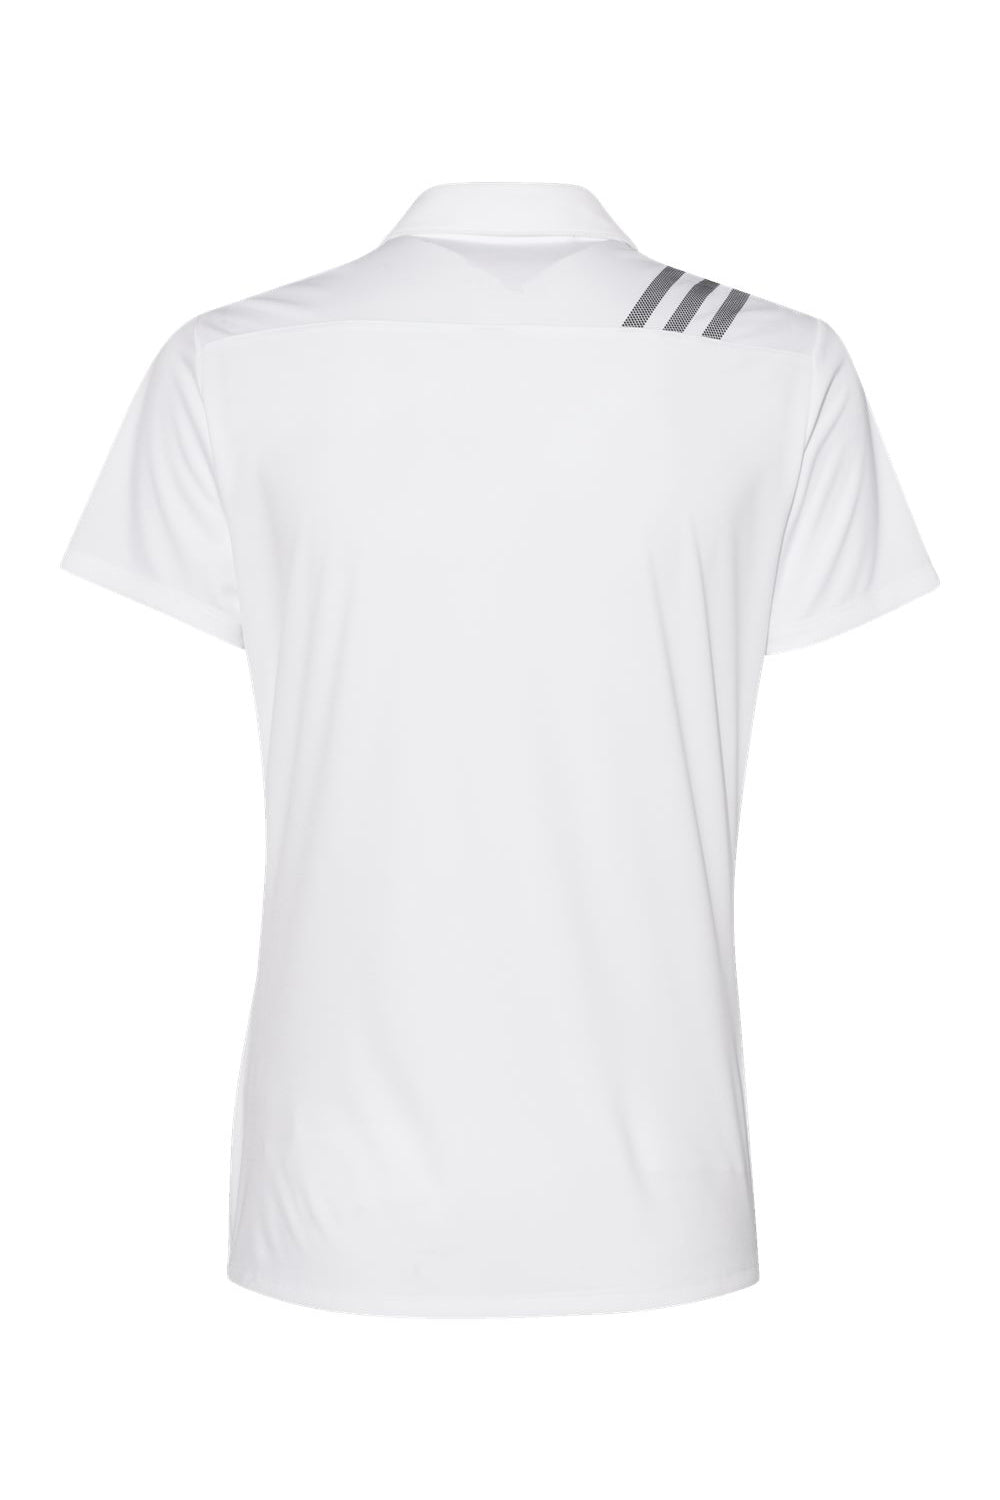 Adidas A325 Womens 3 Stripes Short Sleeve Polo Shirt White/Black Flat Back